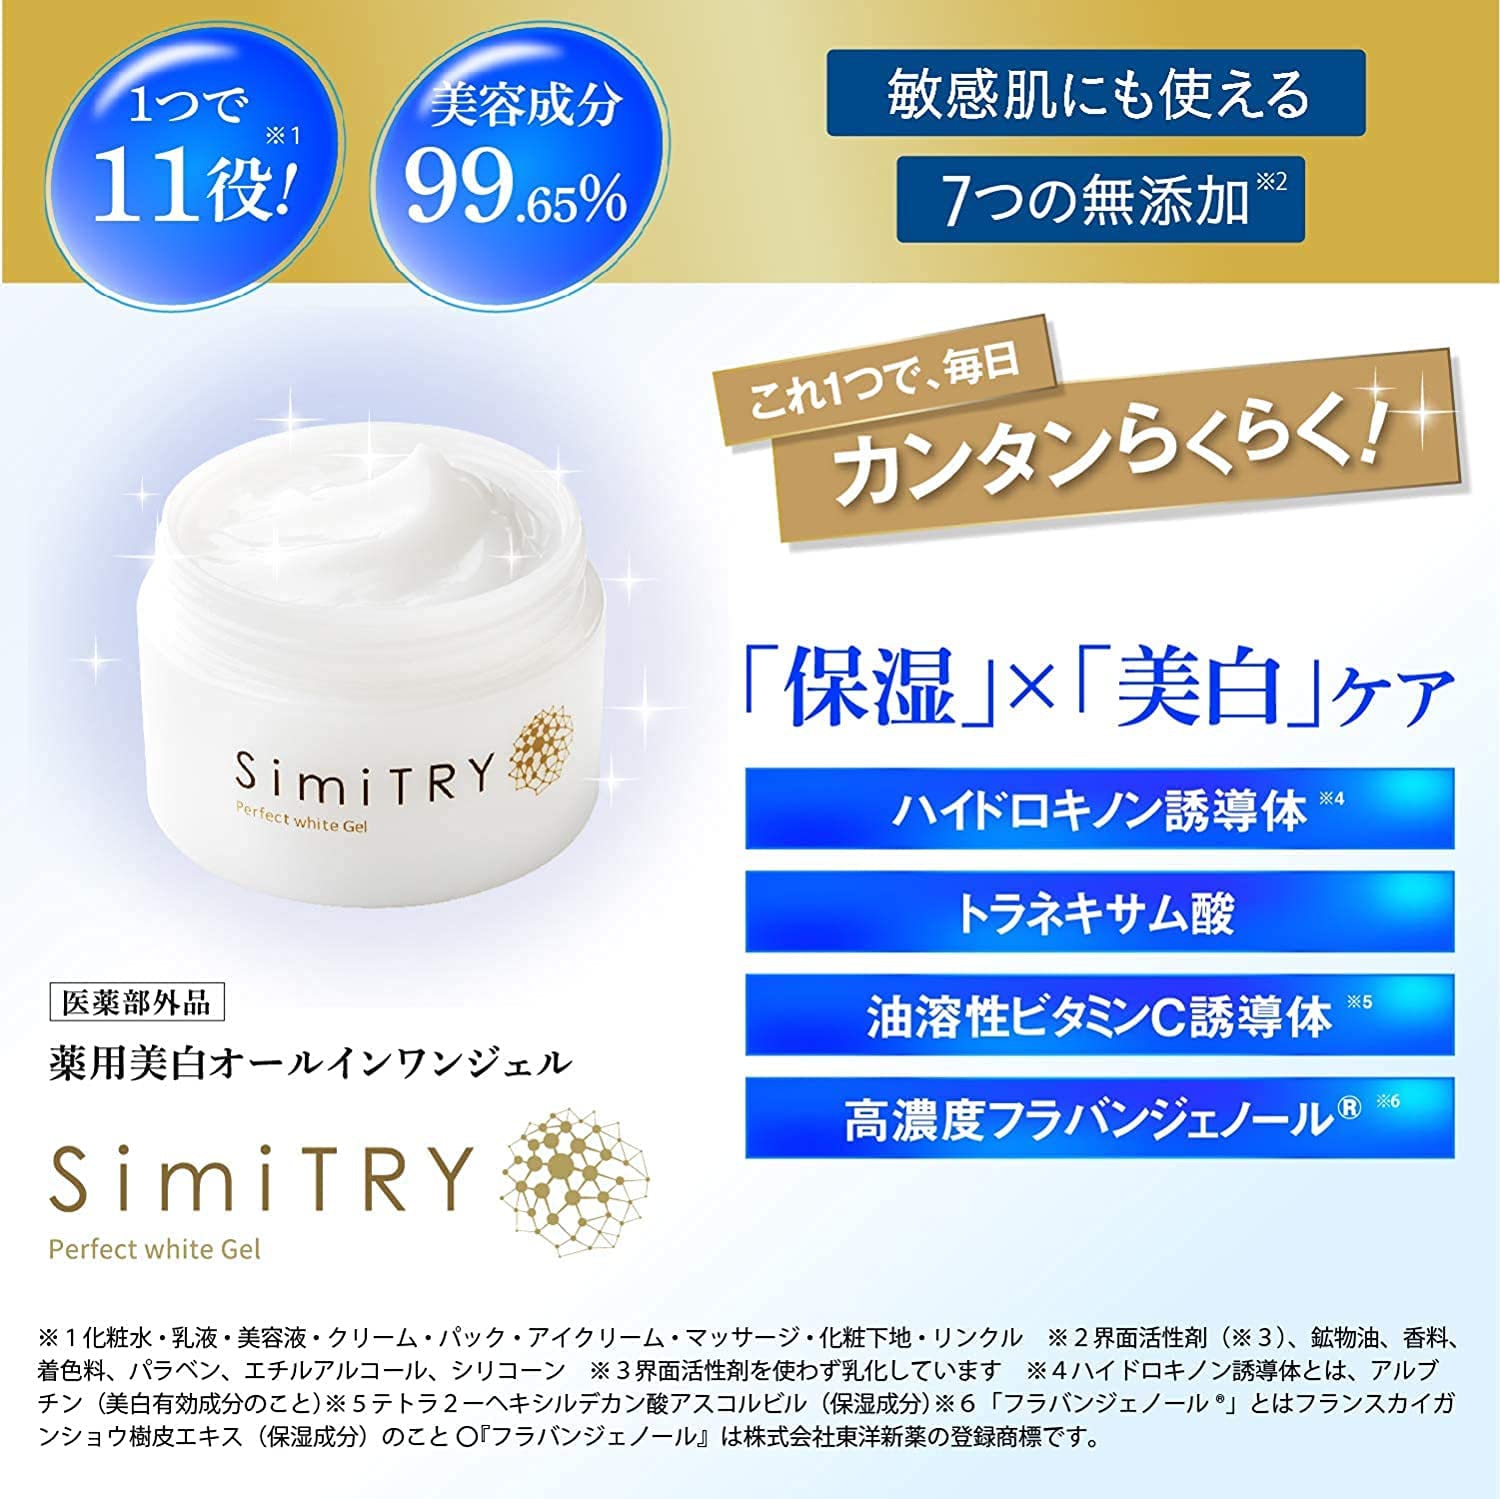 SimiTRY(シミトリー) パーフェクト ホワイト ジェルの商品画像サムネ3 